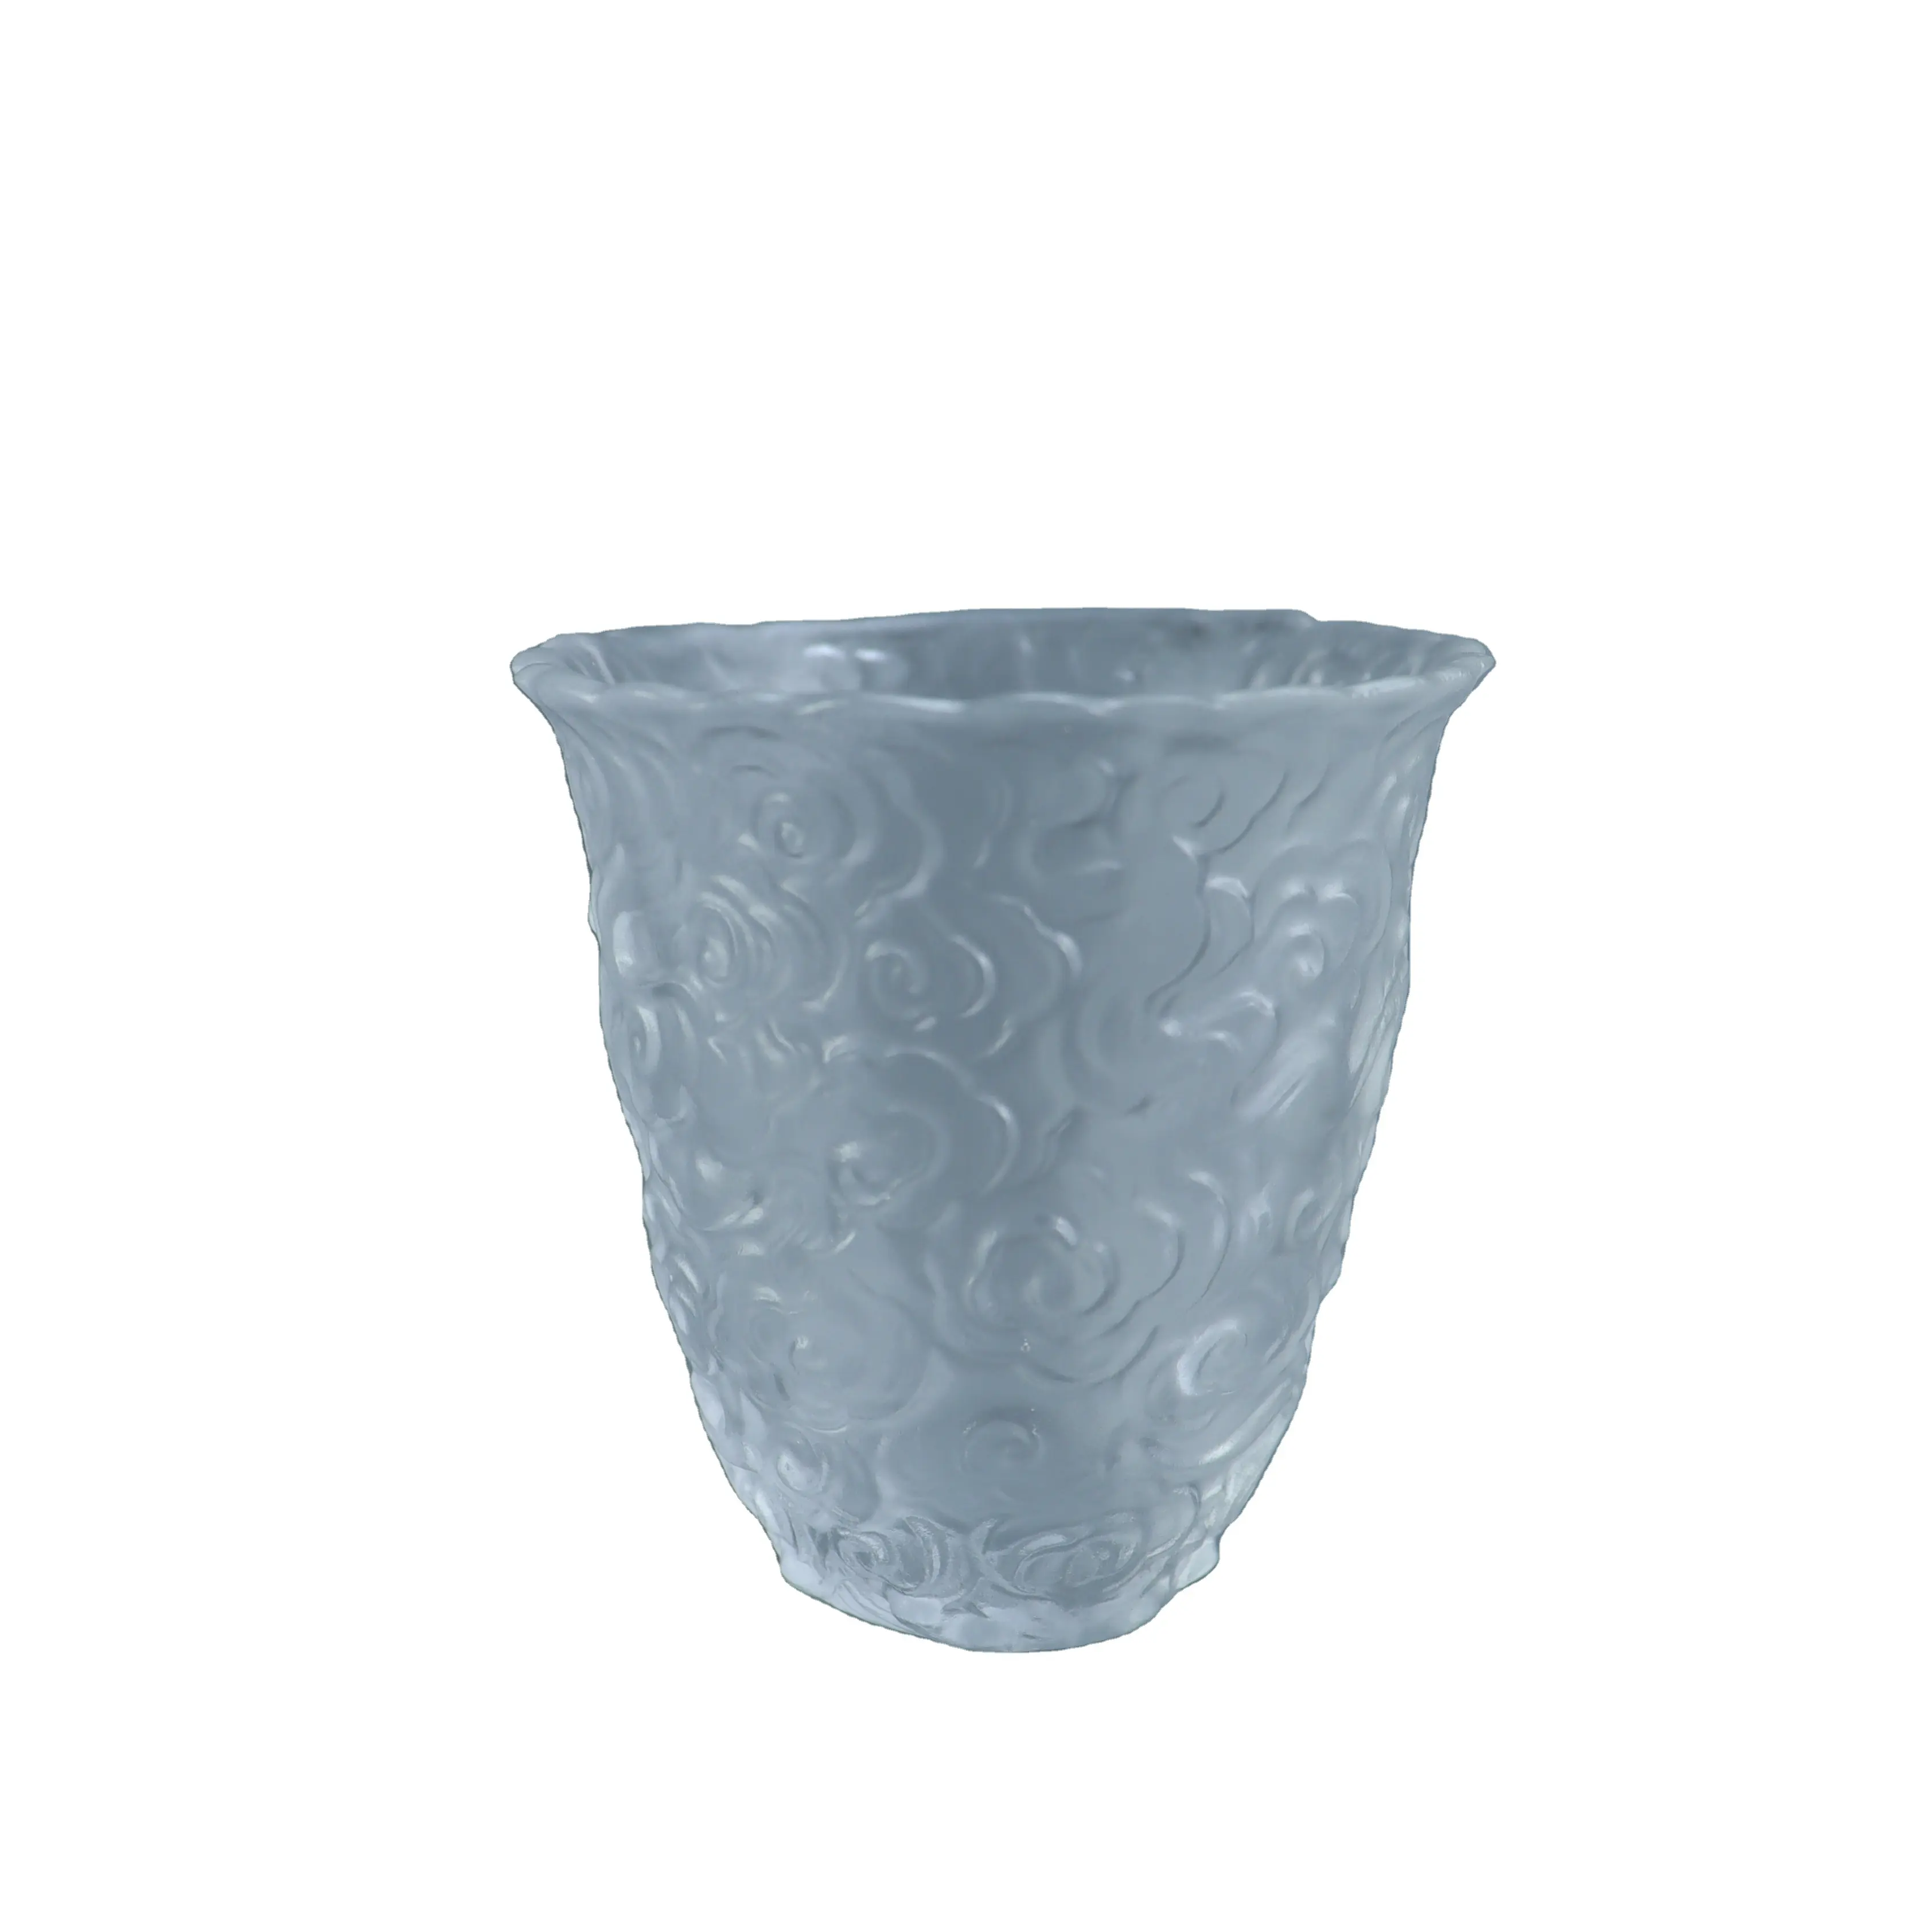 Customizable Japanese Glass Crystal Tea Cup Reusable Tea Cup For Room Use